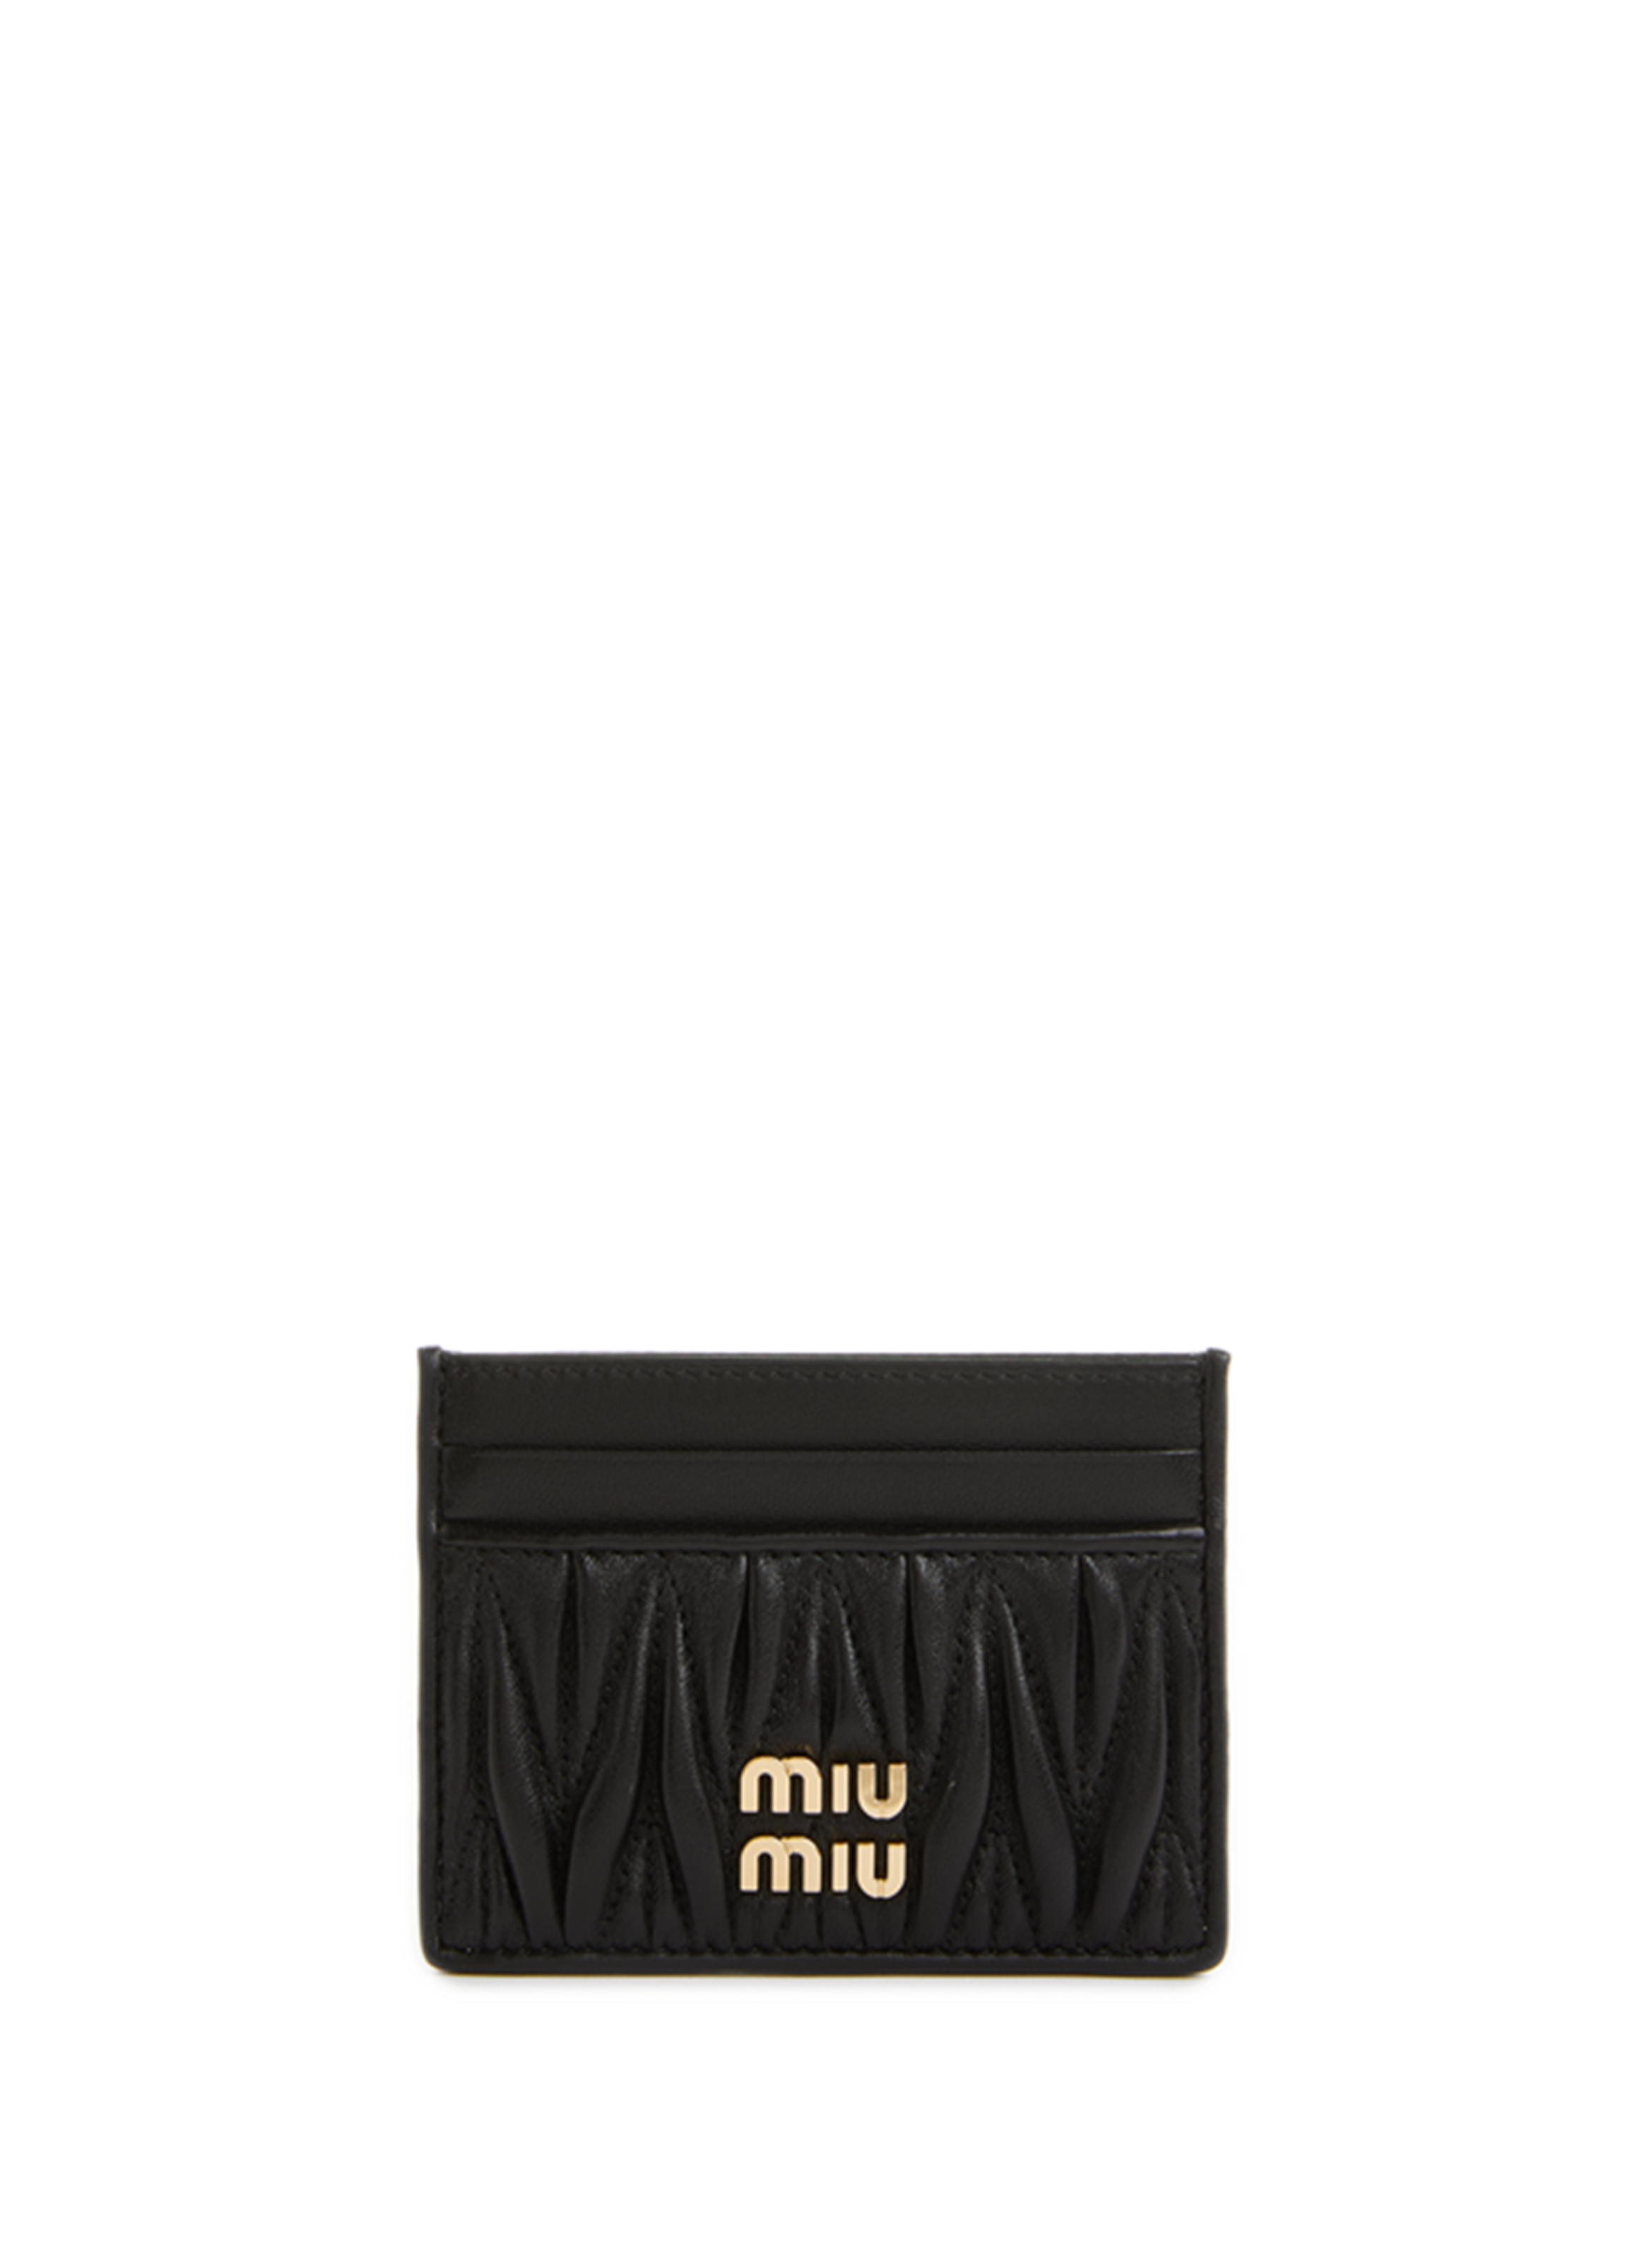 Miu Miu Hand Bag 3 pieces set Shoulder Bag Leather Pinks Leather 1015378 -  AbuMaizar Dental Roots Clinic